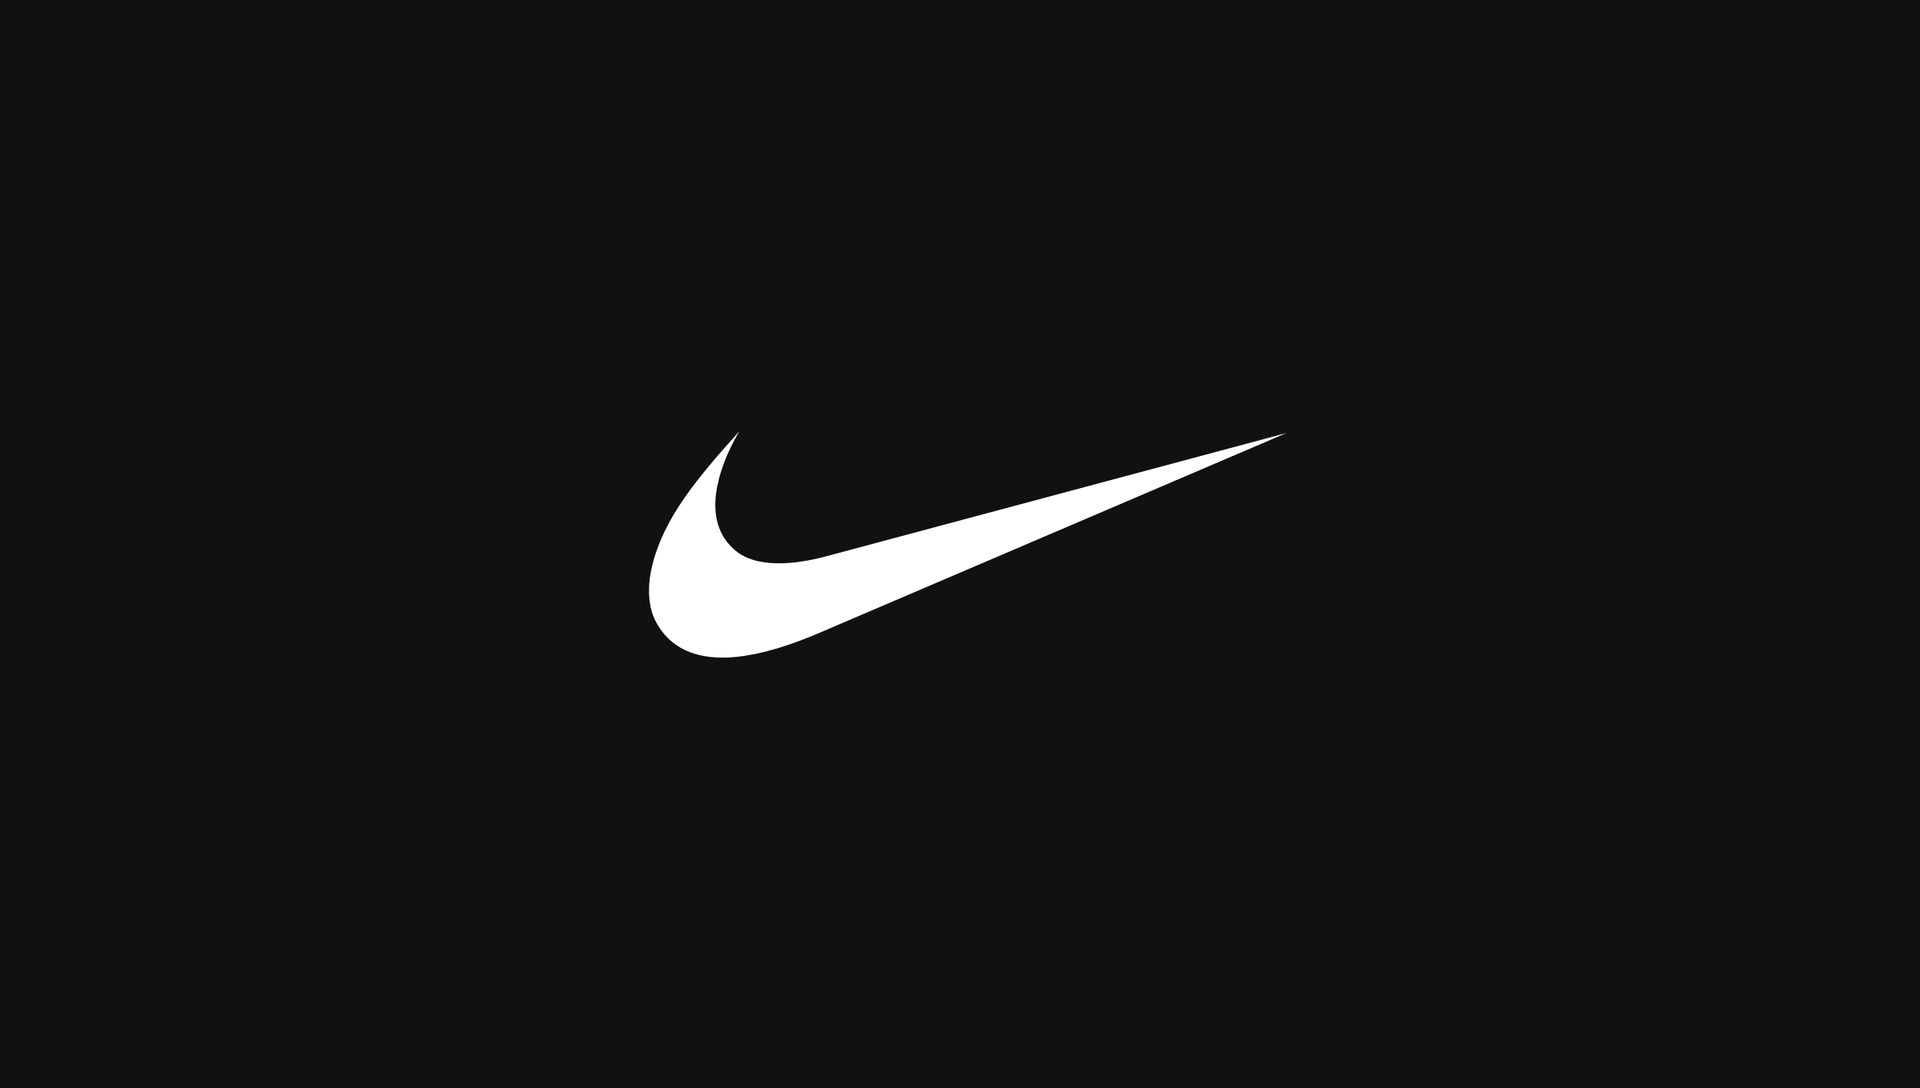 Nike's .SWOOSH Taps Fortnite for Web3 Gaming - NFT Plazas